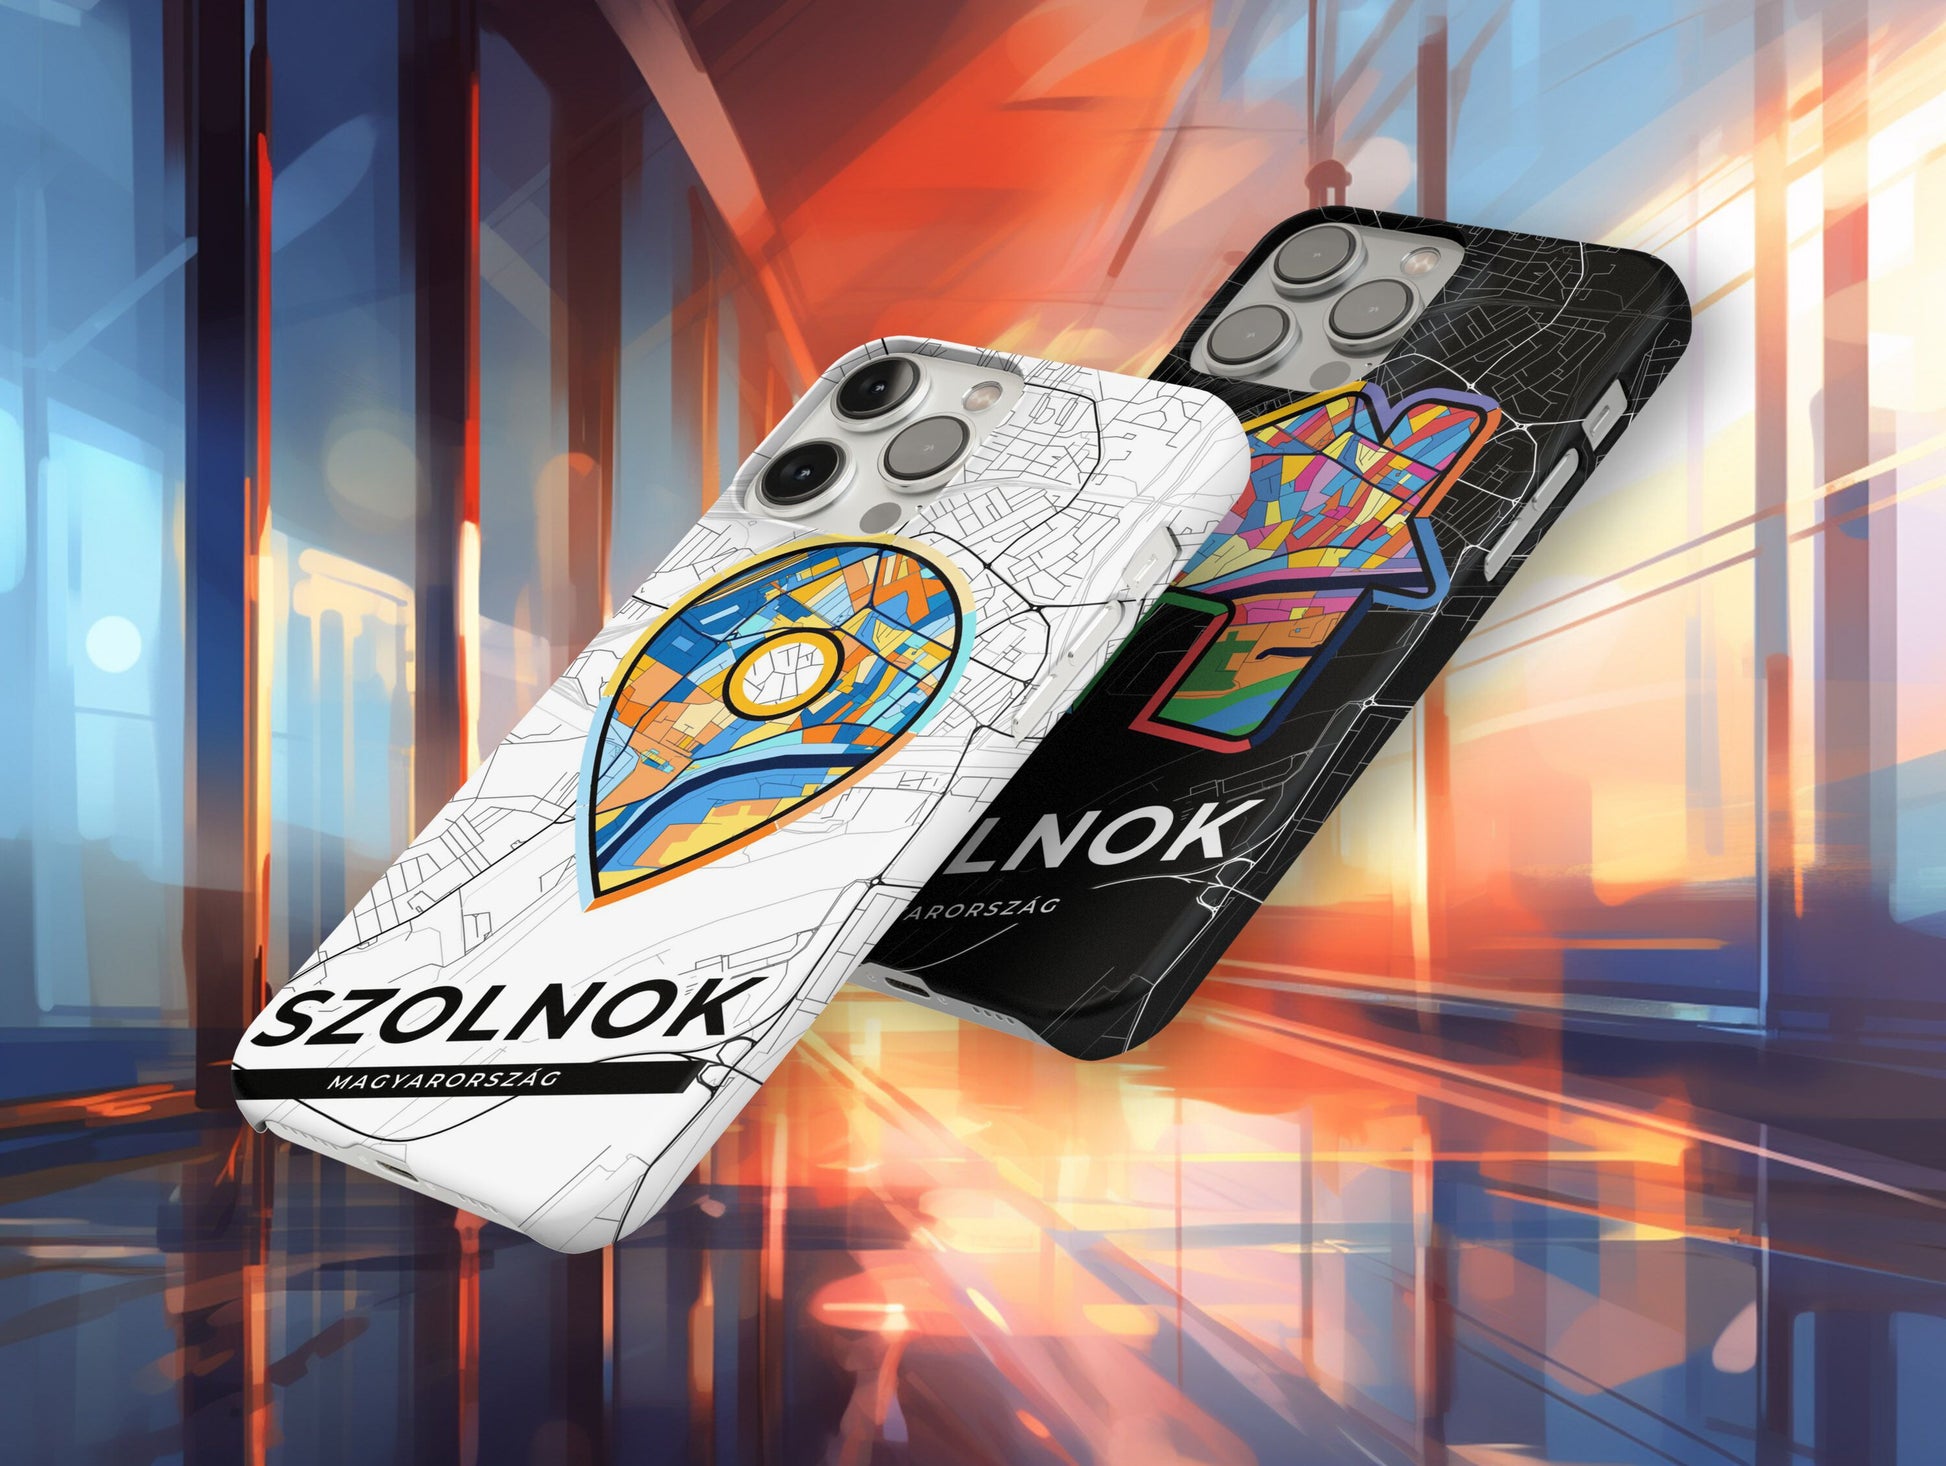 Szolnok Hungary slim phone case with colorful icon